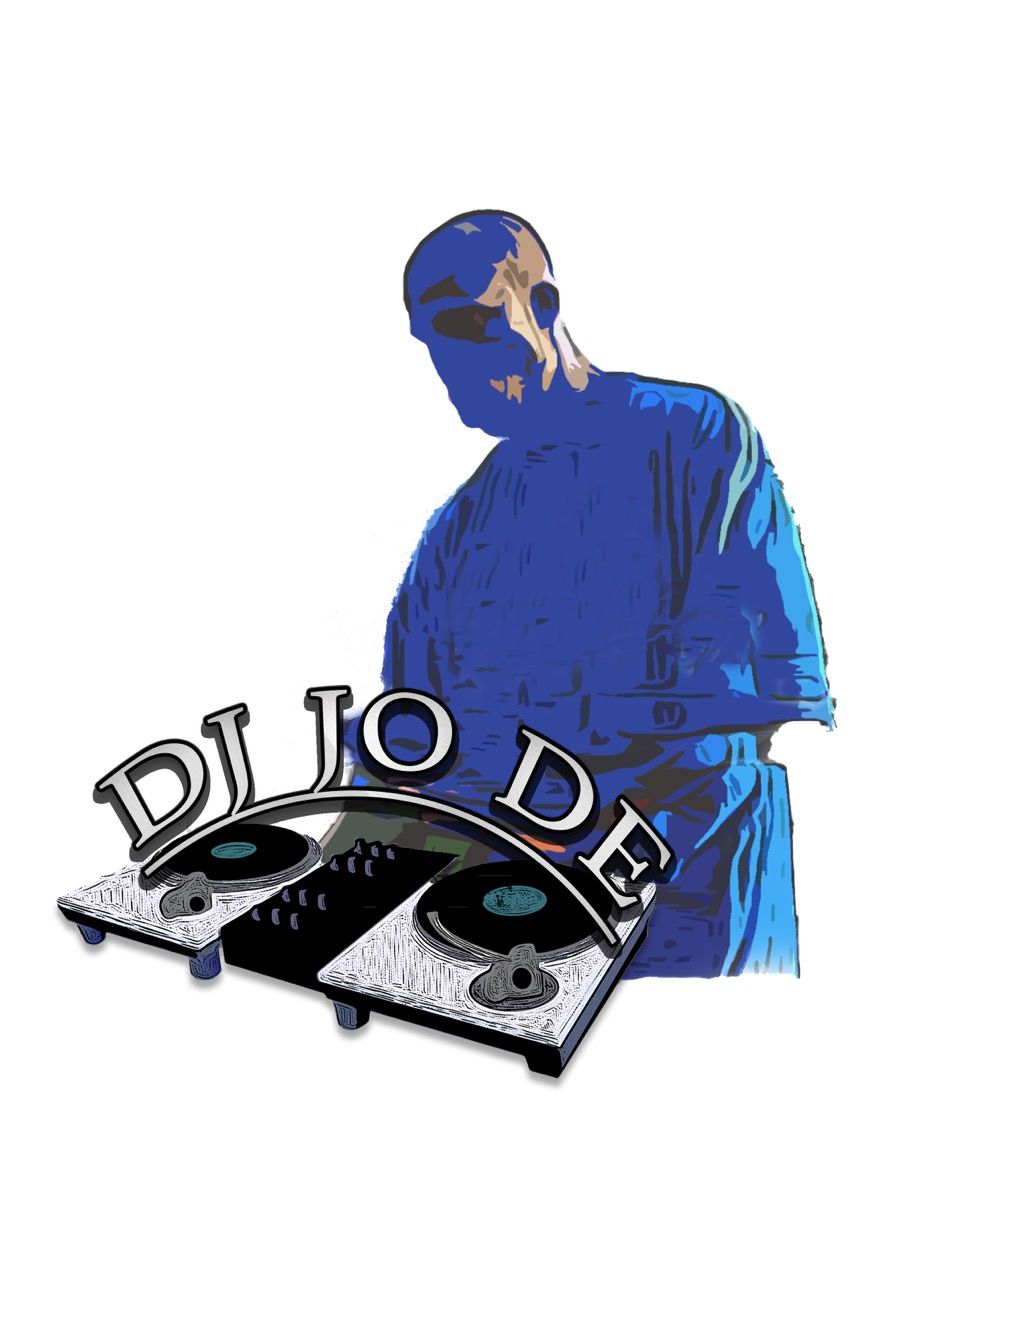 DJ Jo De/SDEPRODUCTIONS